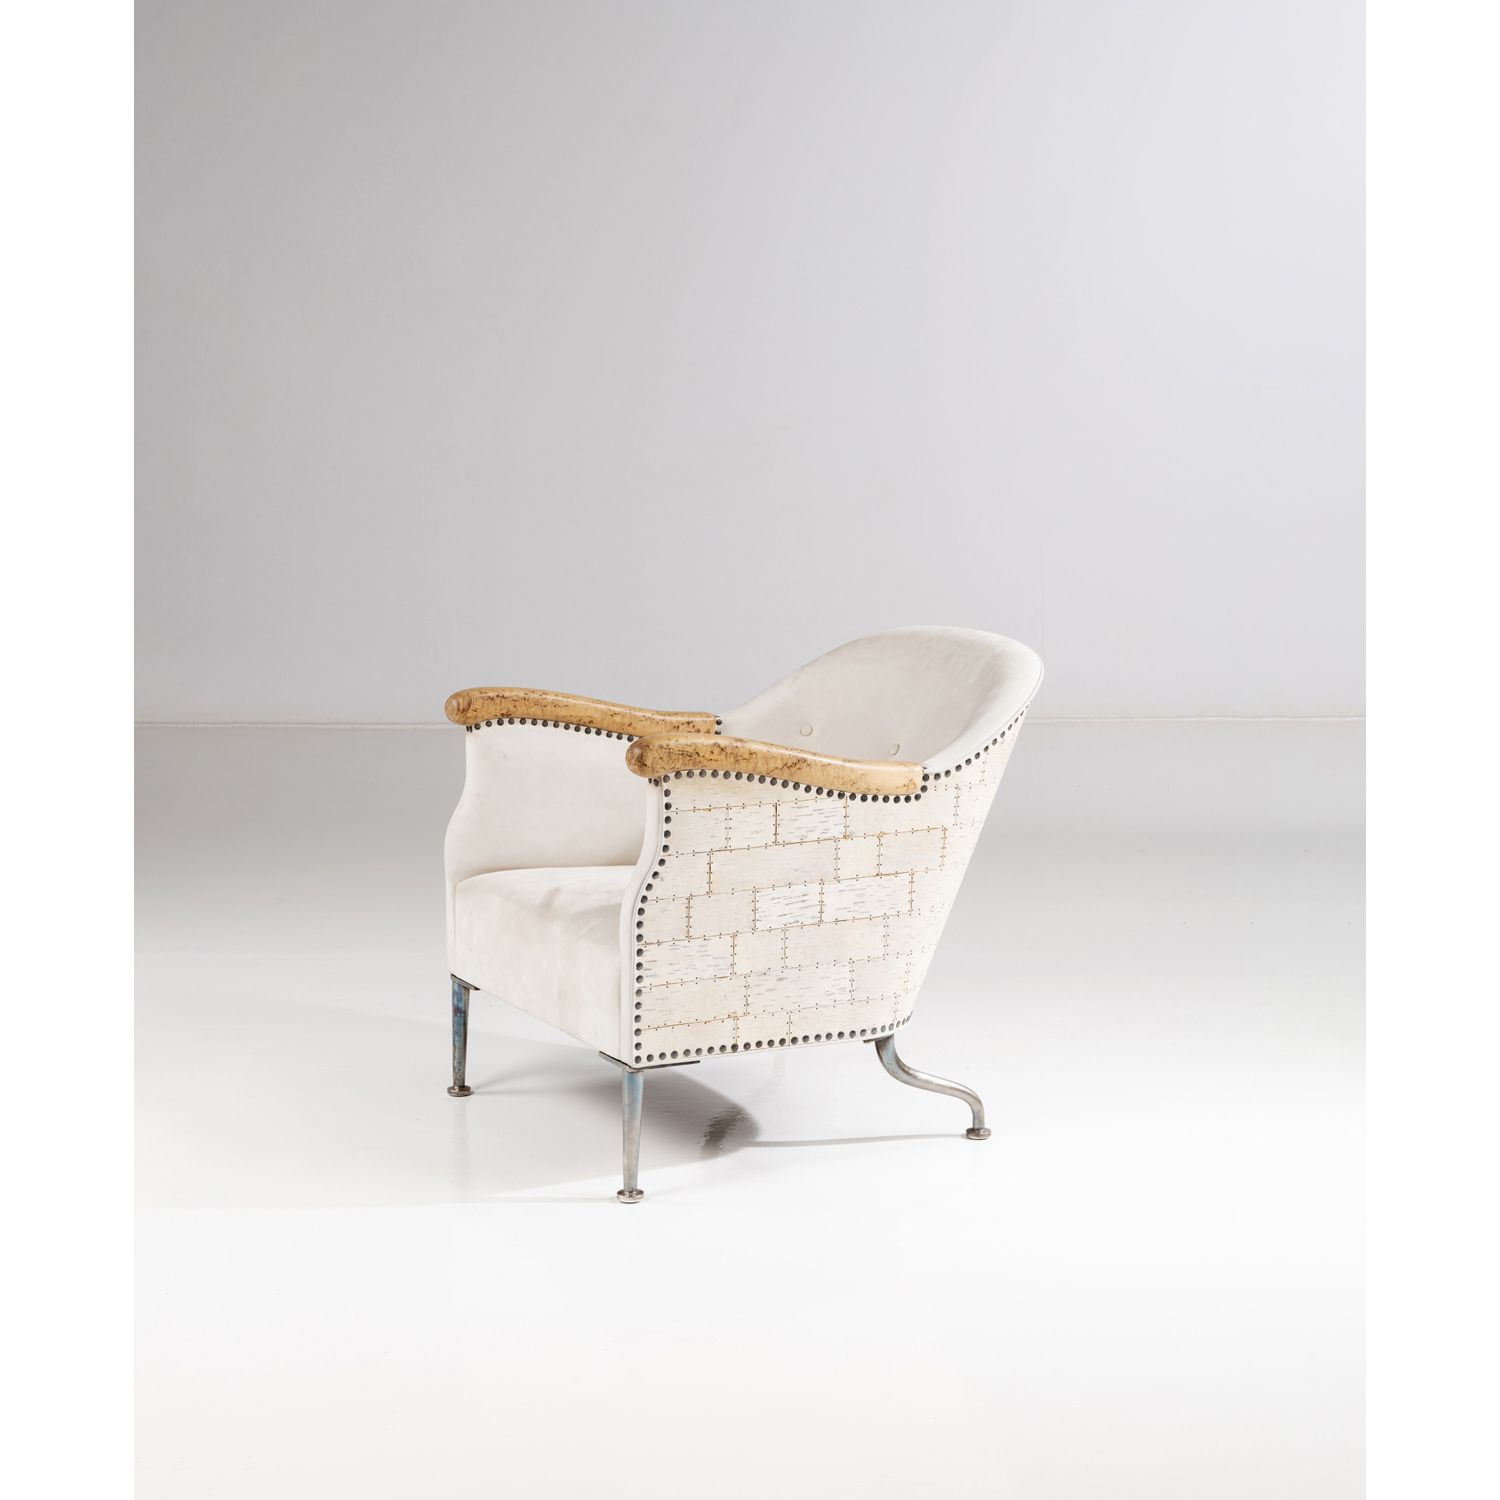 Null 马茨-特塞利乌斯（生于1956年

罗兰的霍尔纳

扶手椅 - 独特的作品

木饰面、桦木饰面、金属和翻转皮革

2010年左右创建的模型

高76×&hellip;